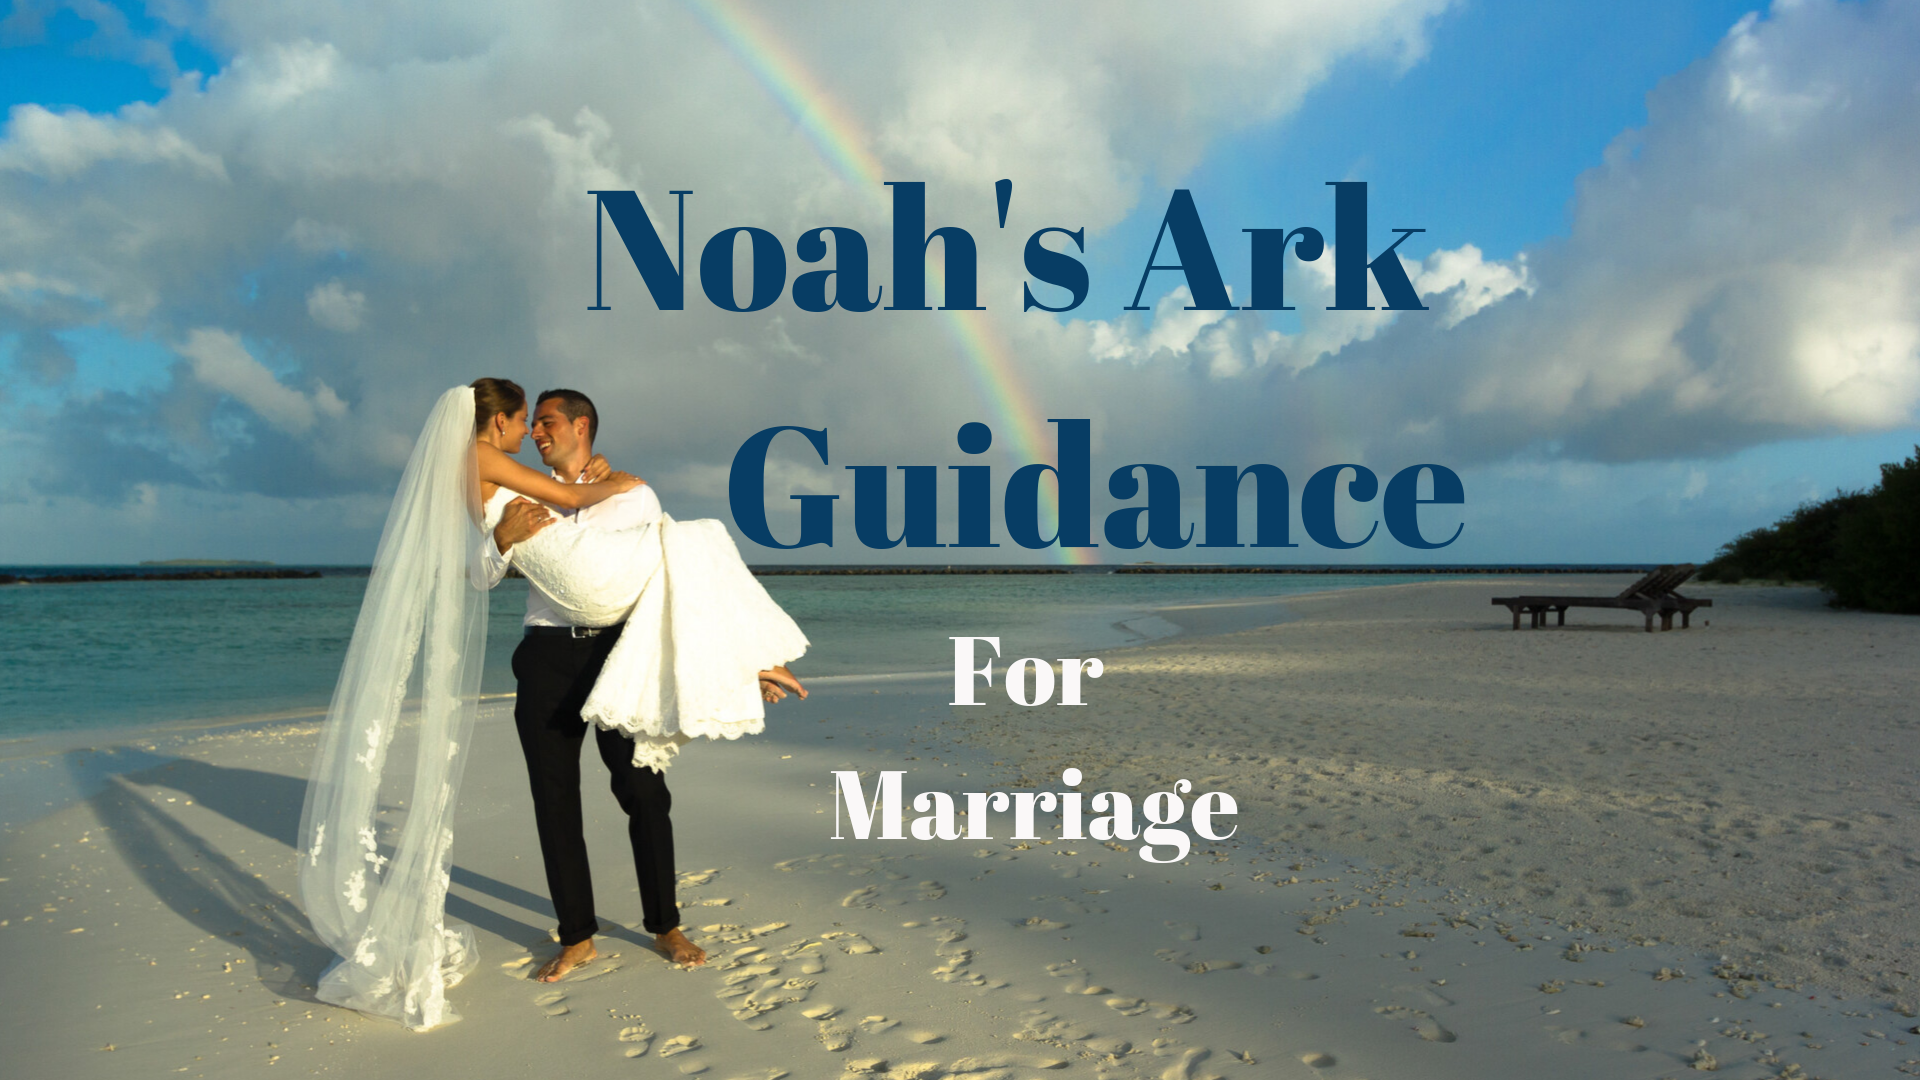 Noah's Ark guidance